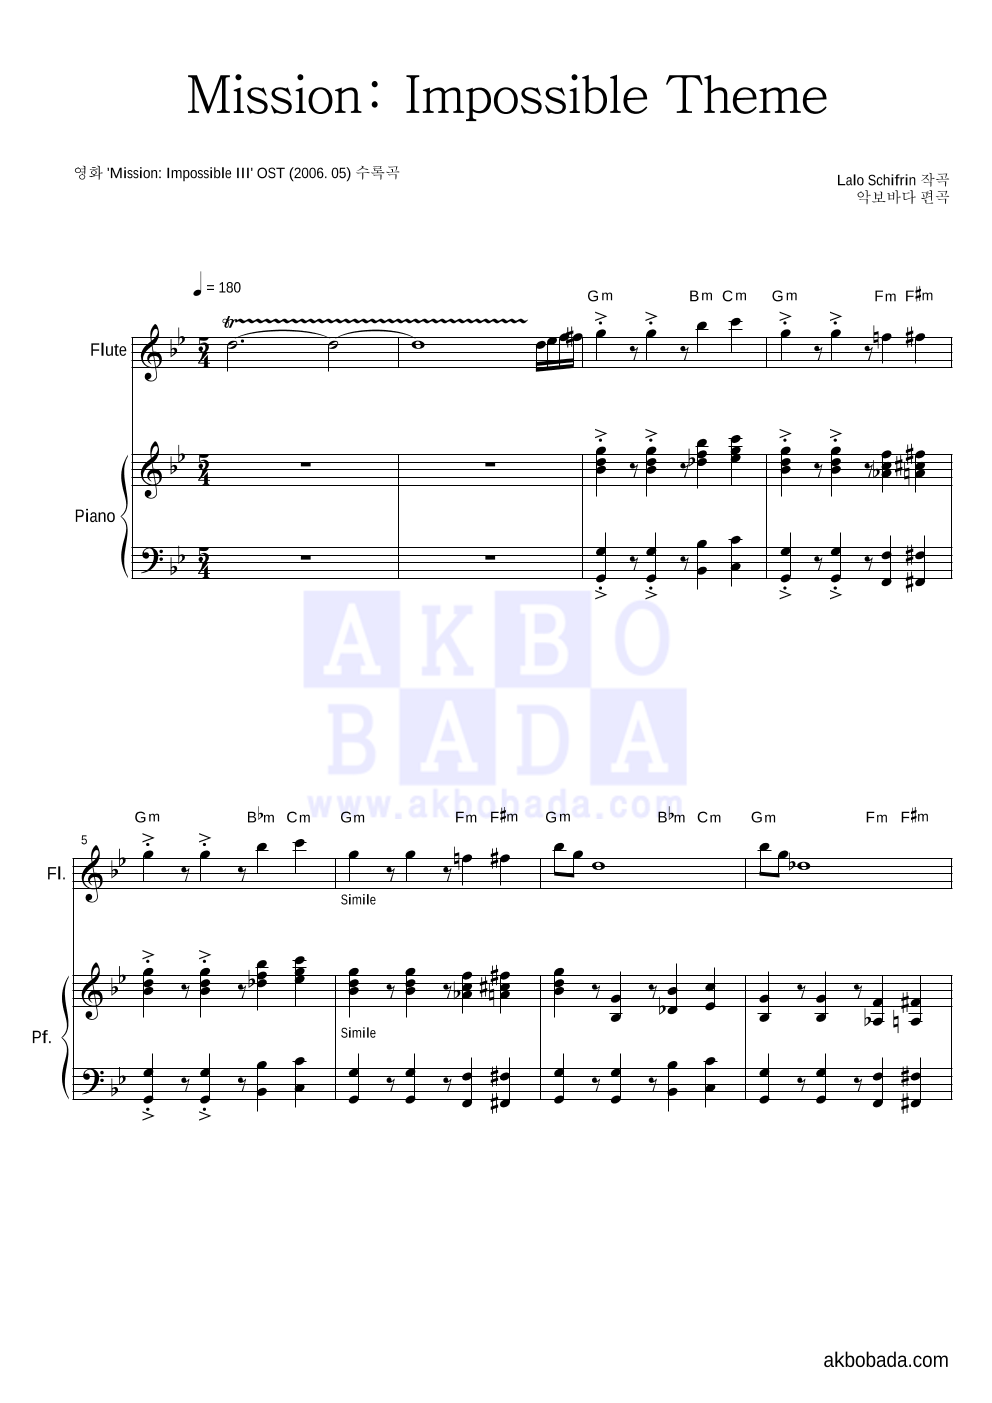 Lalo Schifrin - Mission: Impossible Theme 플룻&피아노 악보 